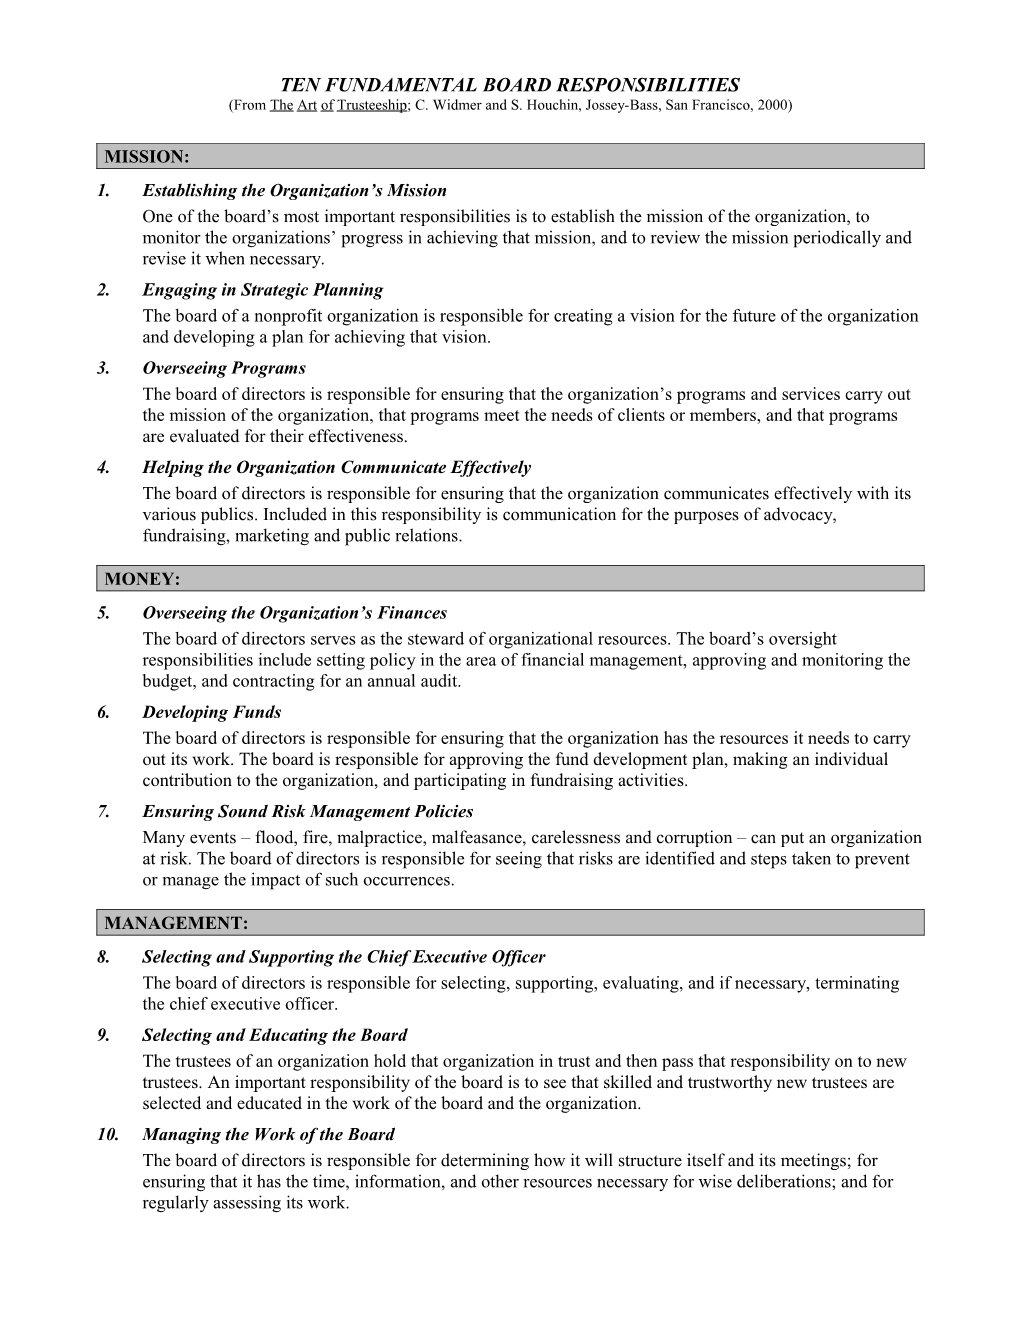 Ten Fundamental Board Responsibilities